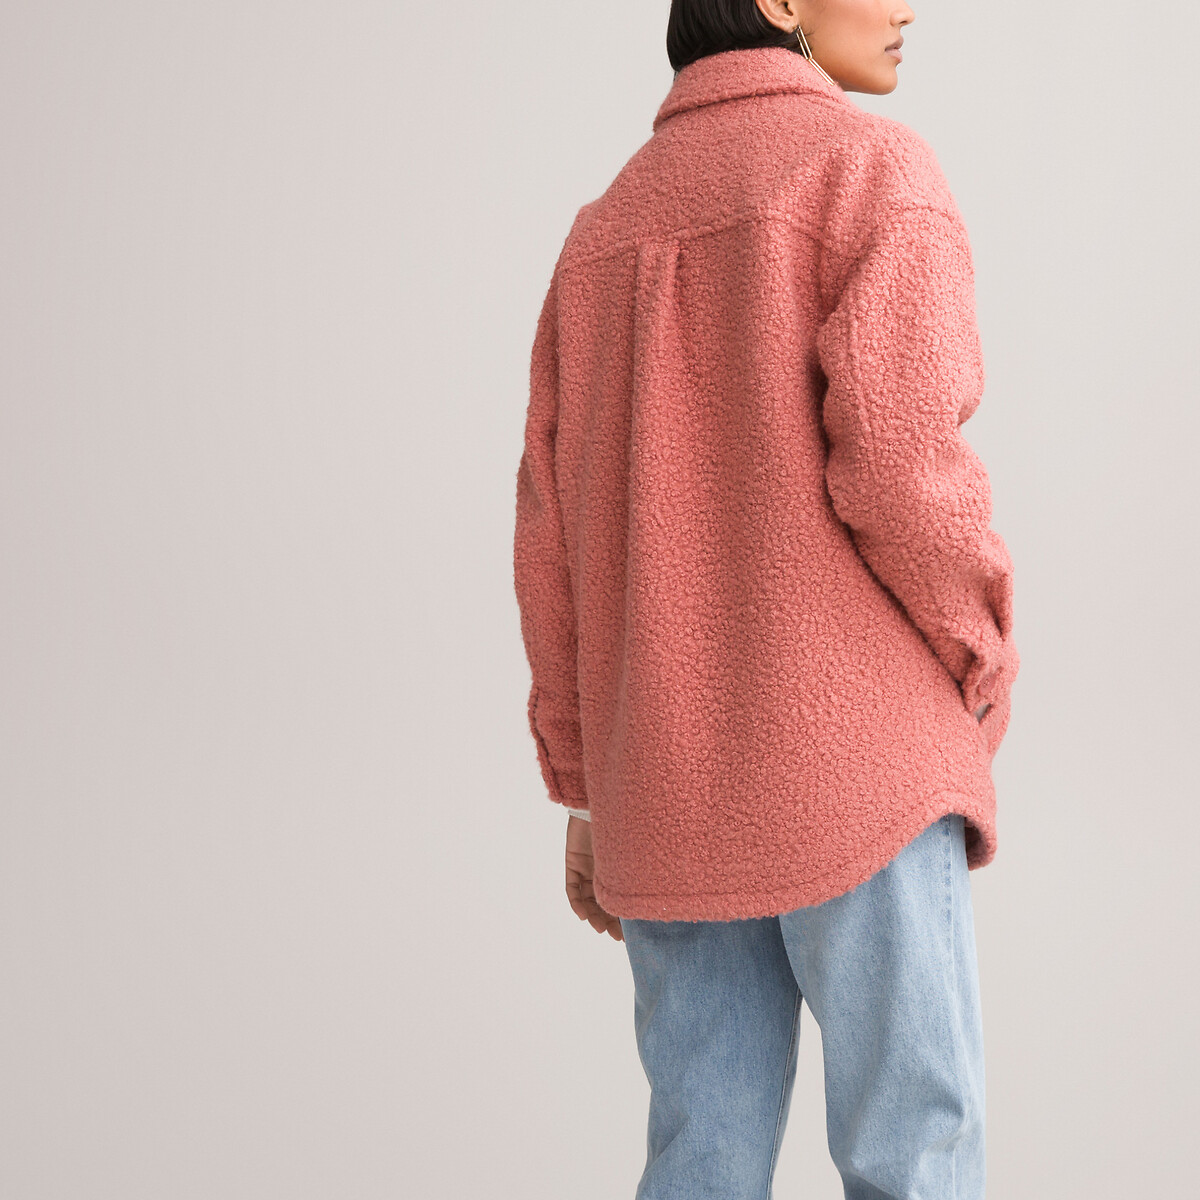 Куртка LaRedoute Легкая под мутон 36 (FR) - 42 (RUS) розовый, размер 36 (FR) - 42 (RUS) Легкая под мутон 36 (FR) - 42 (RUS) розовый - фото 4